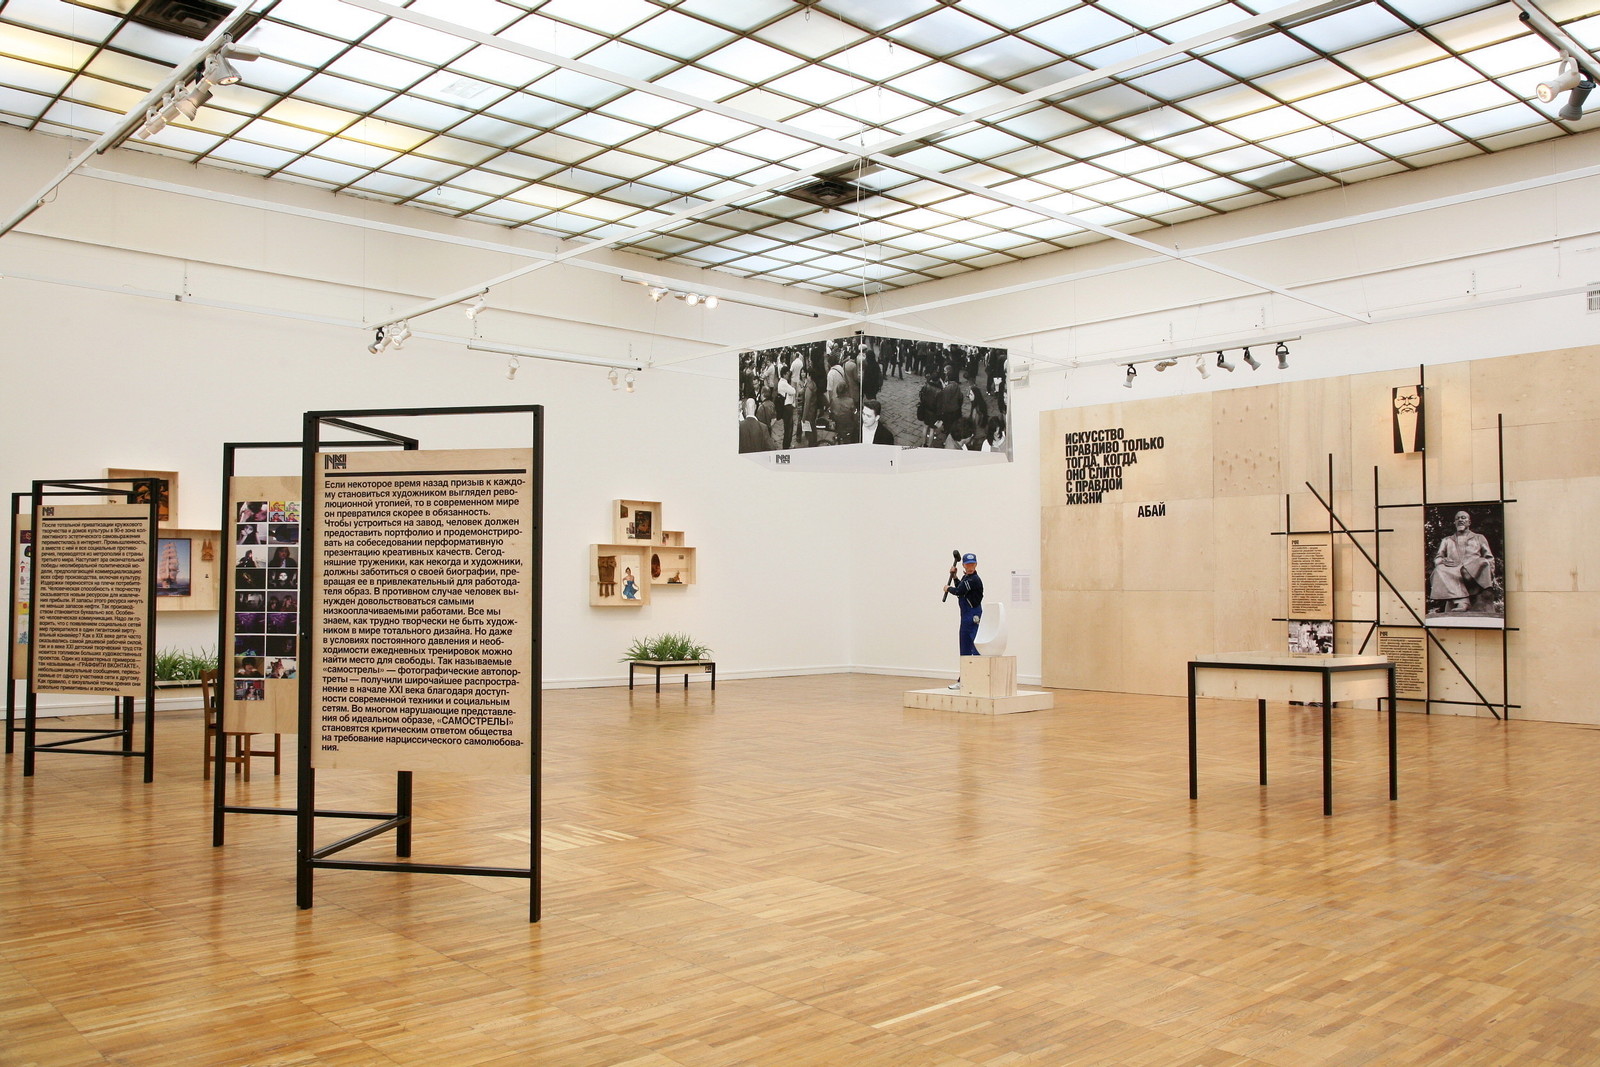 Arseniy ZhilyaevMuseum of Proletarian CultureThe Industrialization of Bohemia, 2012Total installation